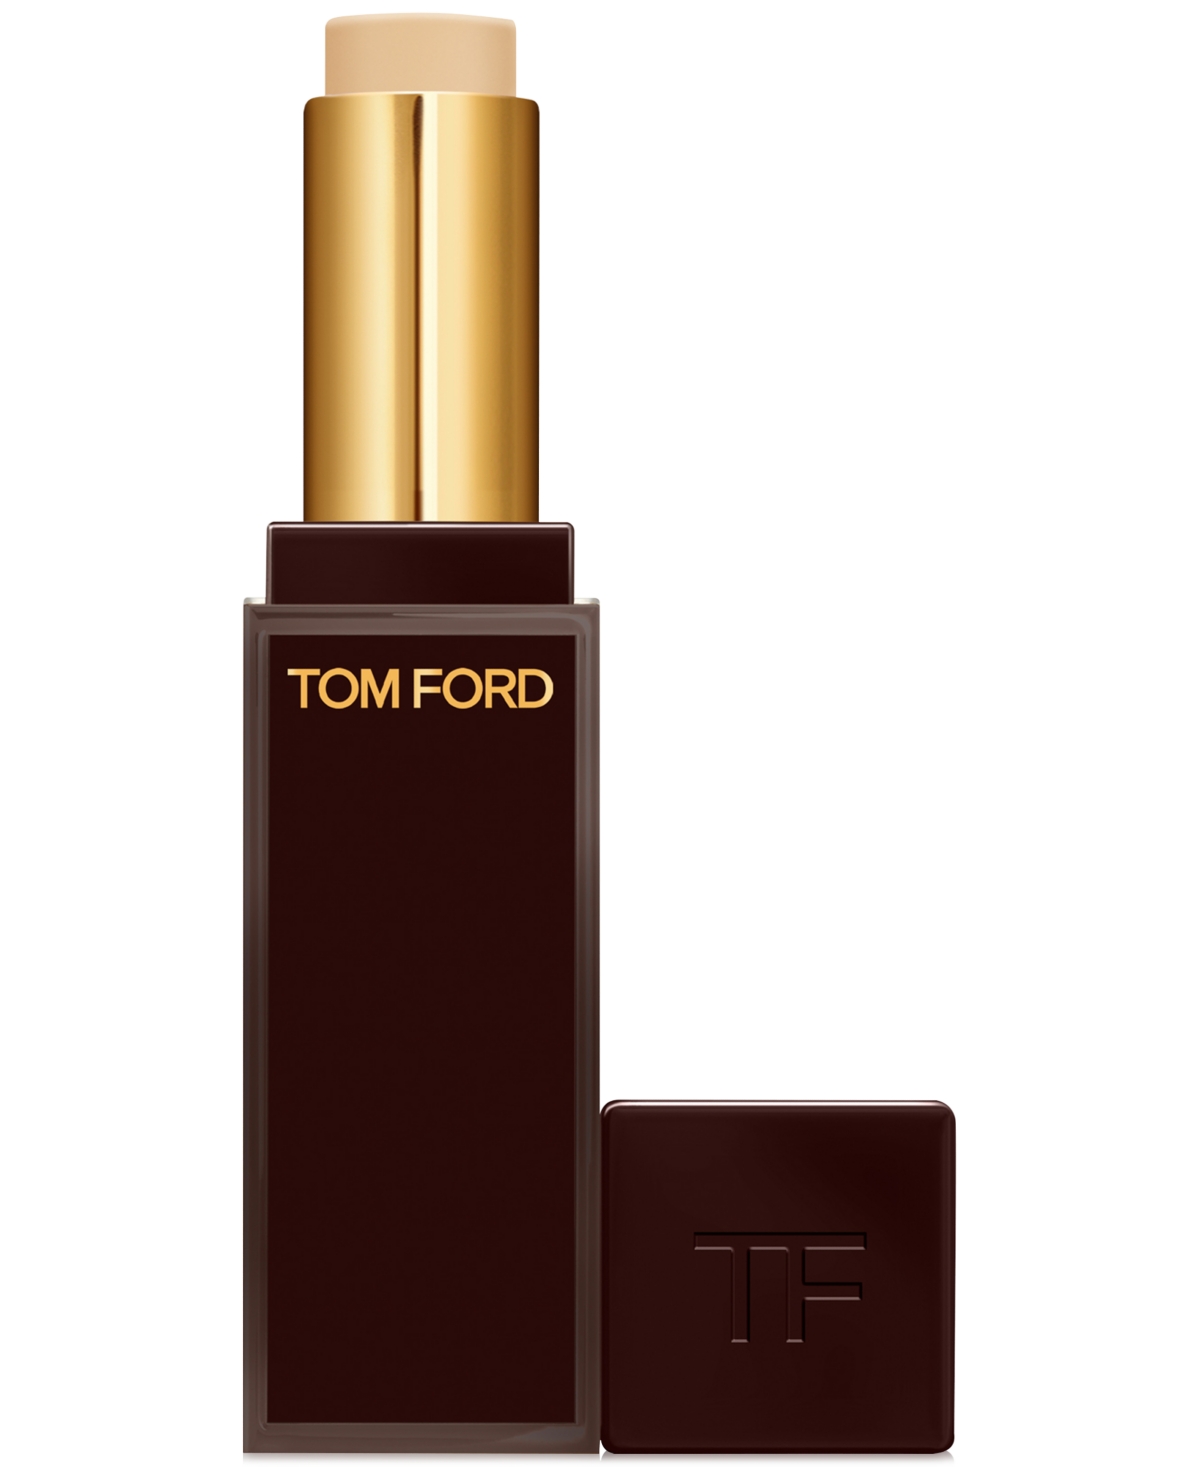 Tom Ford Traceless Soft Matte Concealer In W Ecru (light Skin With Peach Undertones